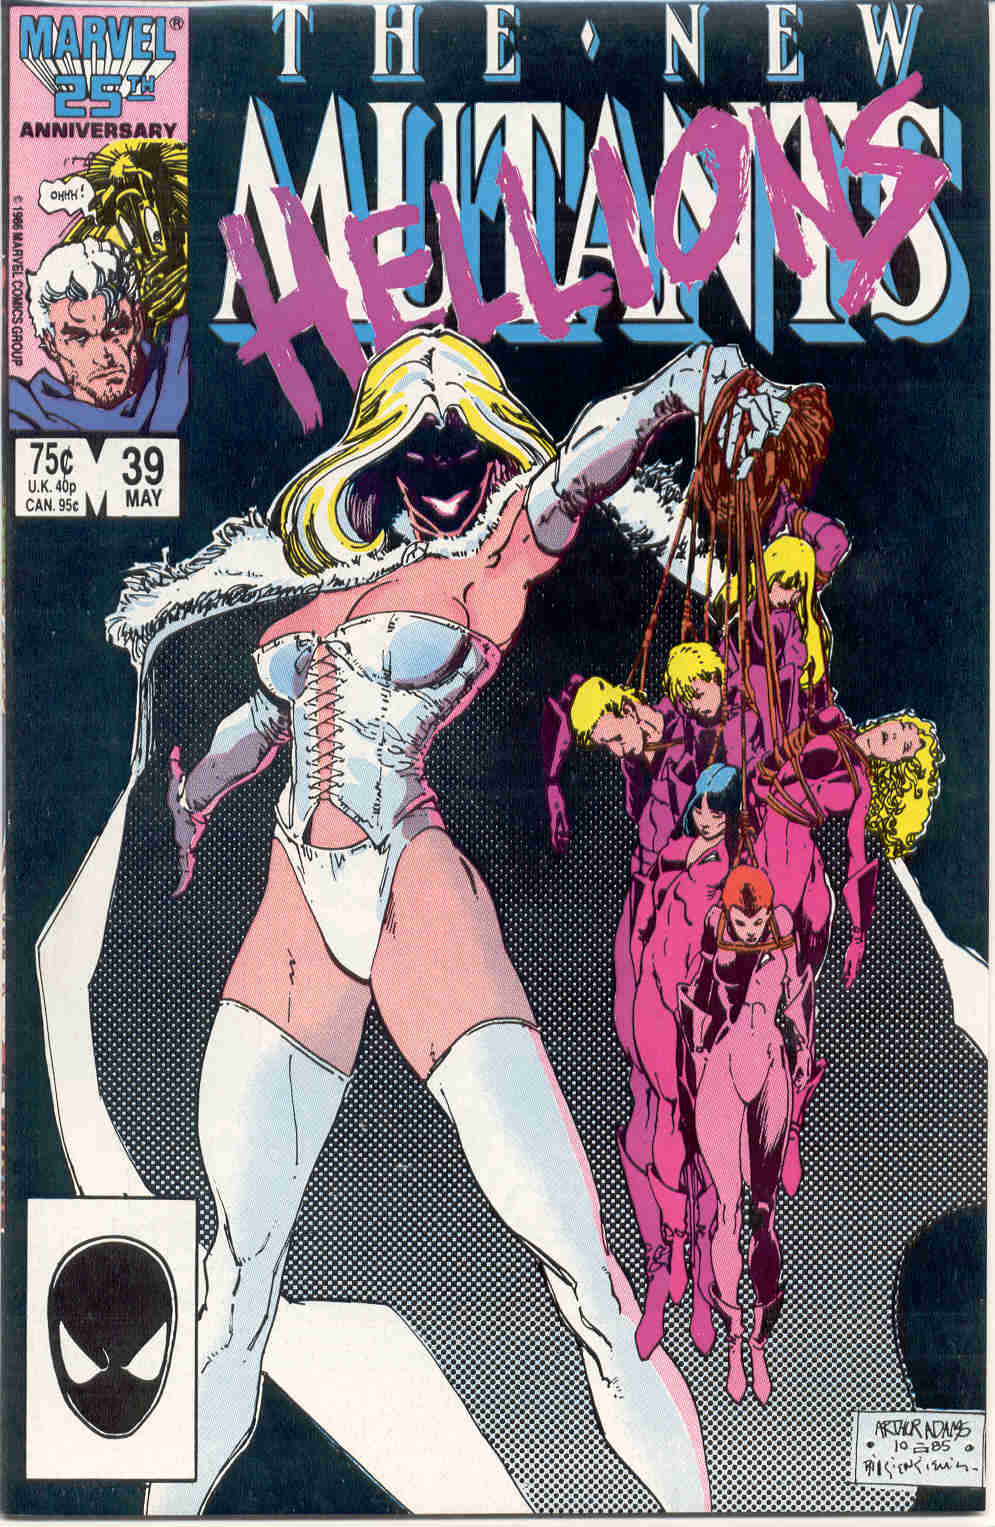 New Mutants #39 cover by Art Adams